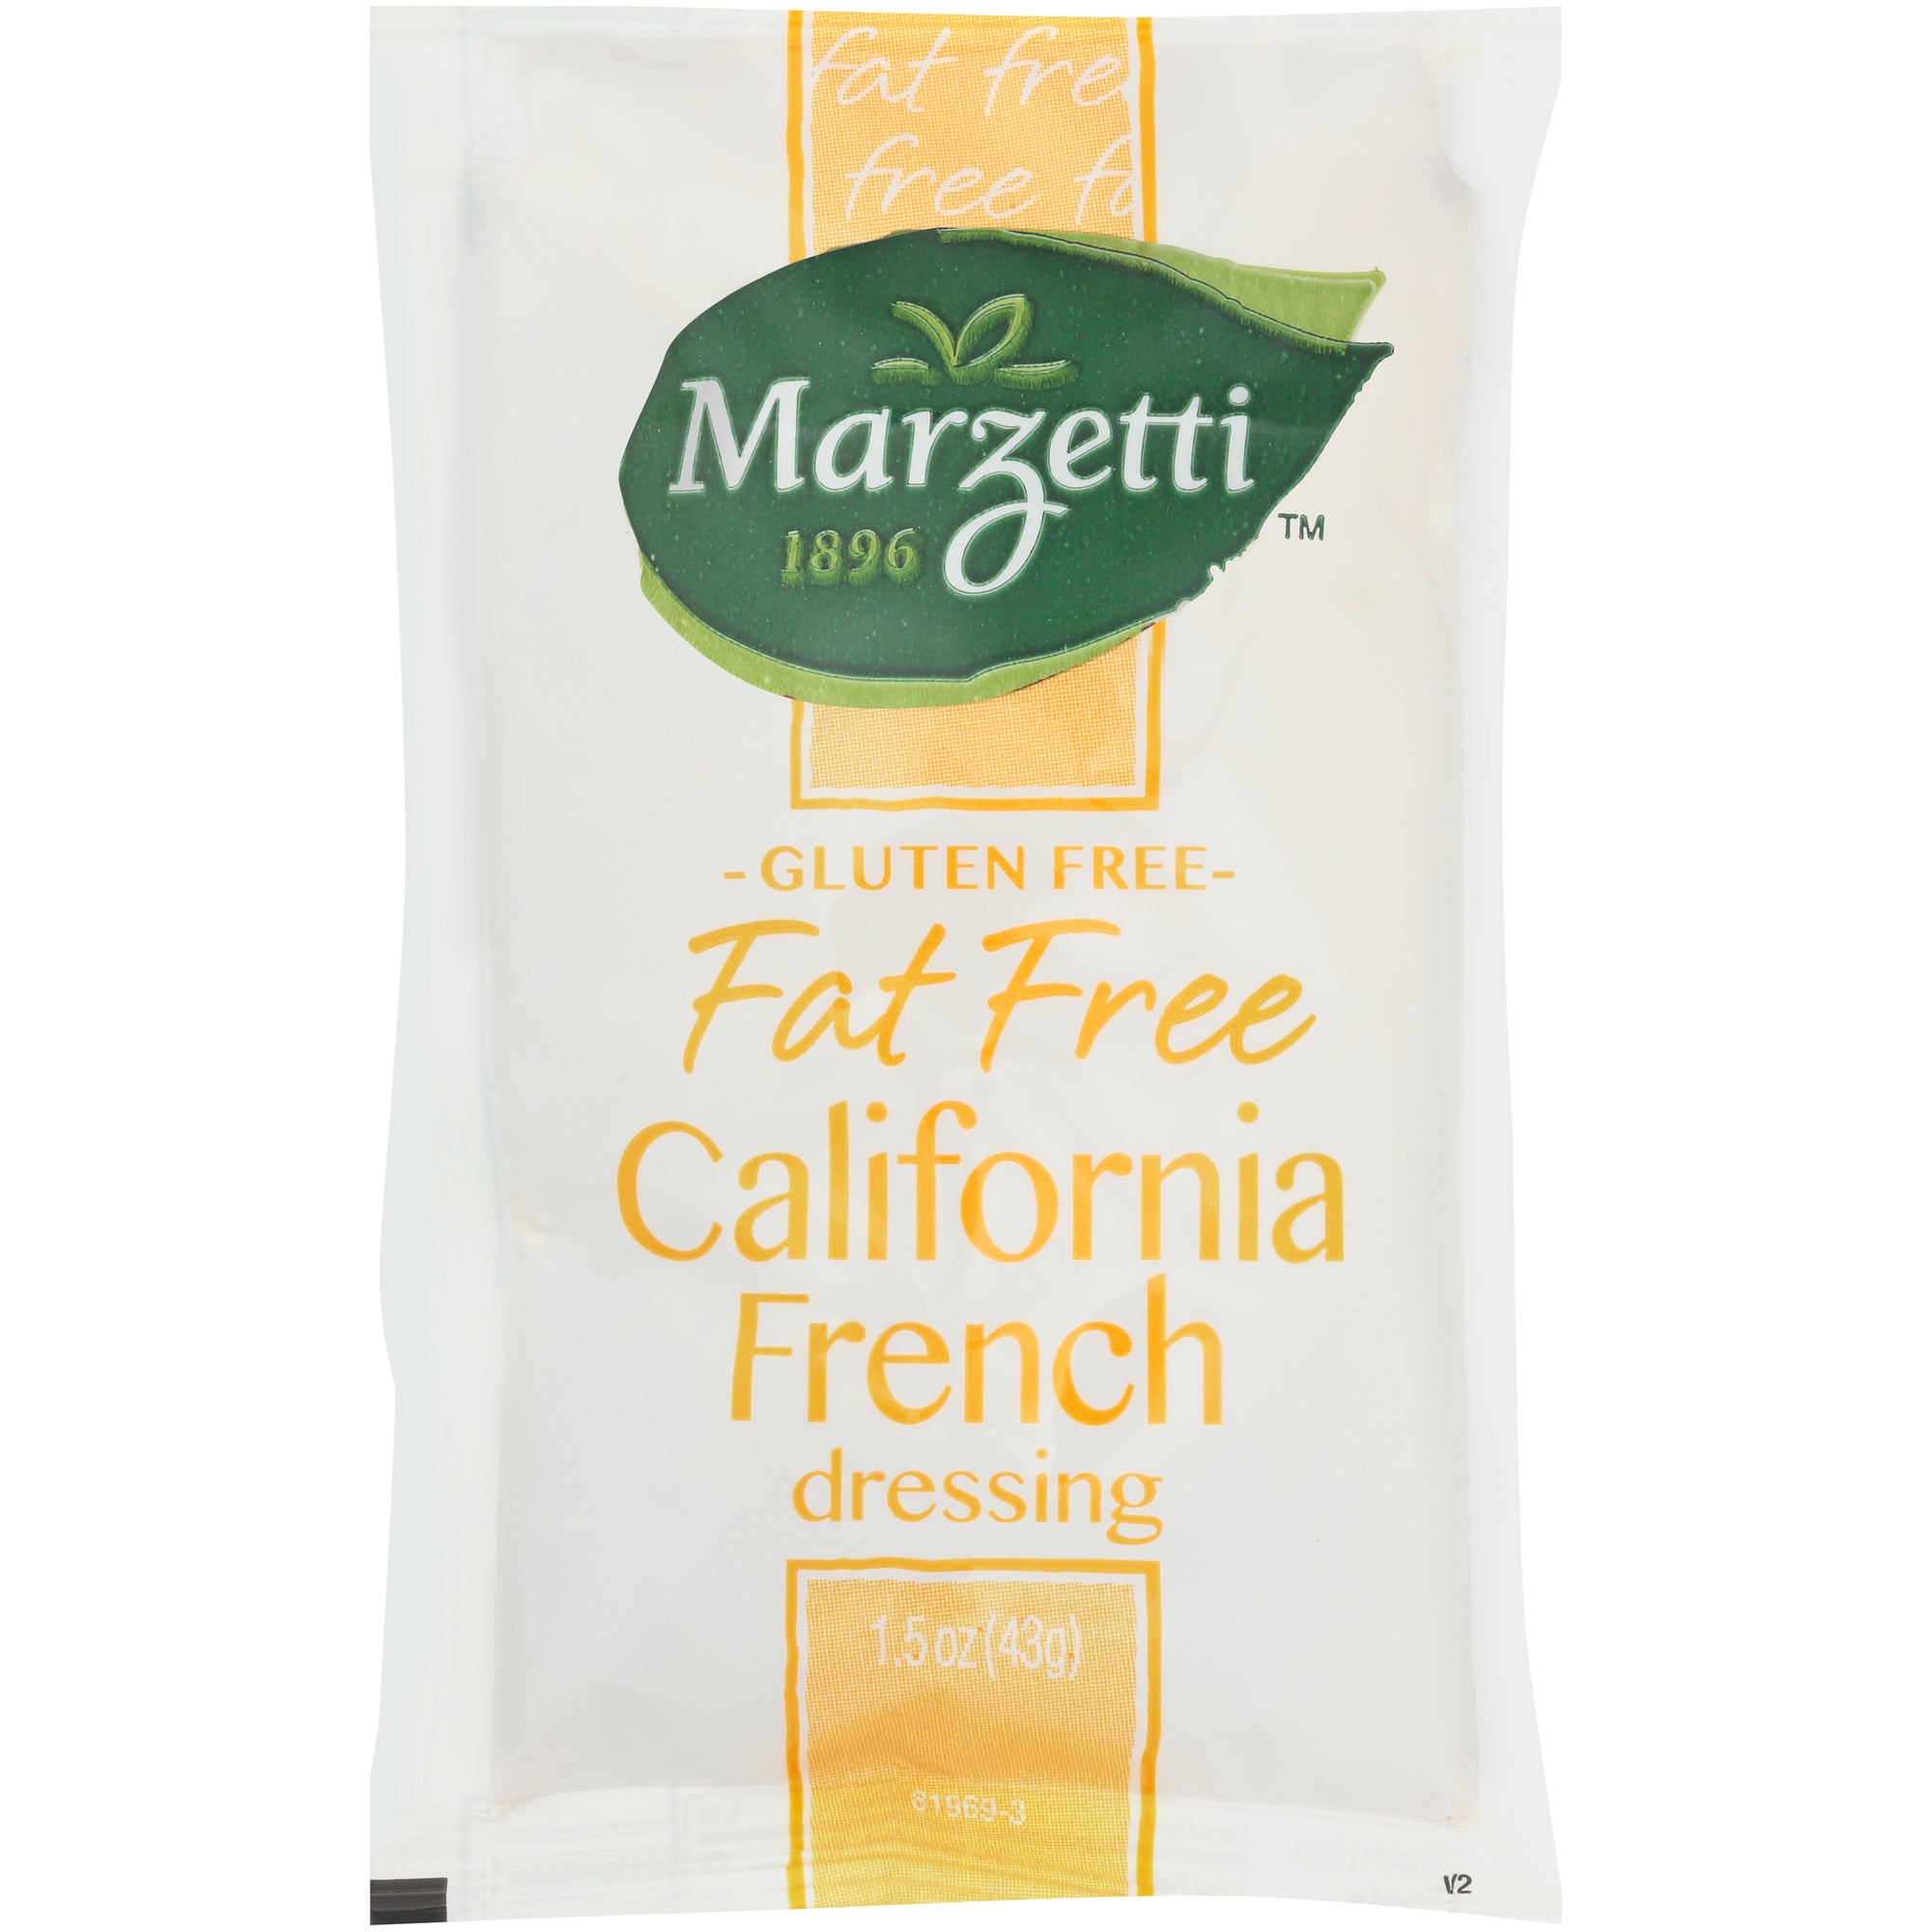 MARZETTI FAT FREE CALIFORNIA FRENCH STYLE DRESSING, 60 - 1.5 OZ